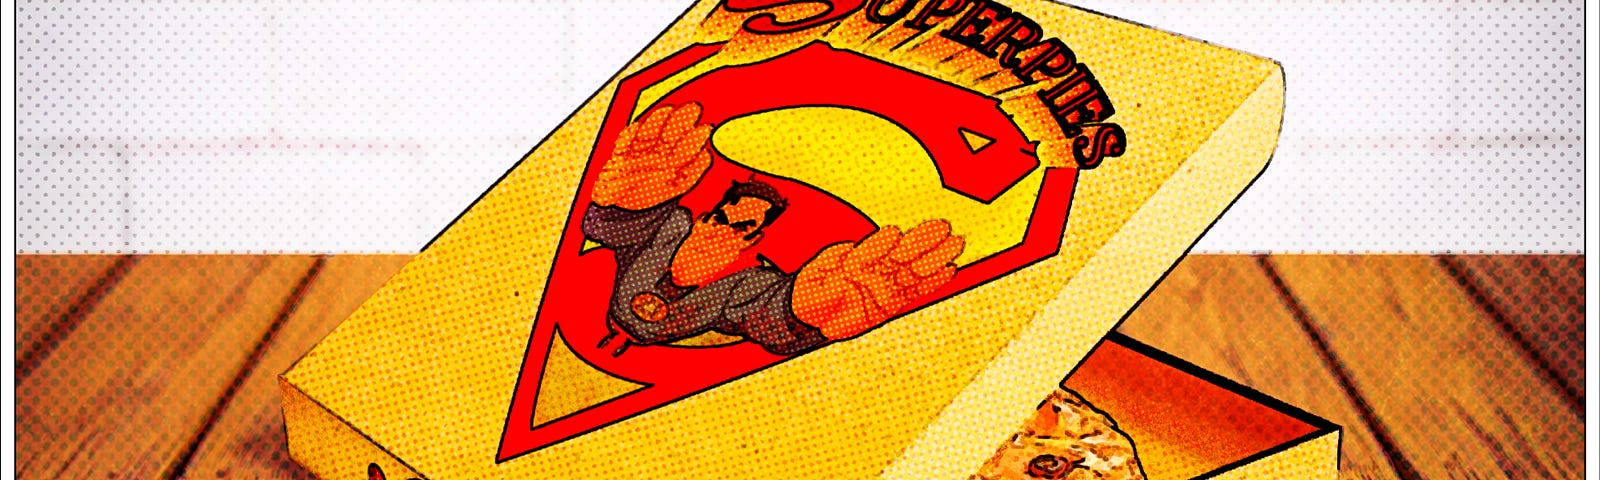 Pizza Box with Superhero logo